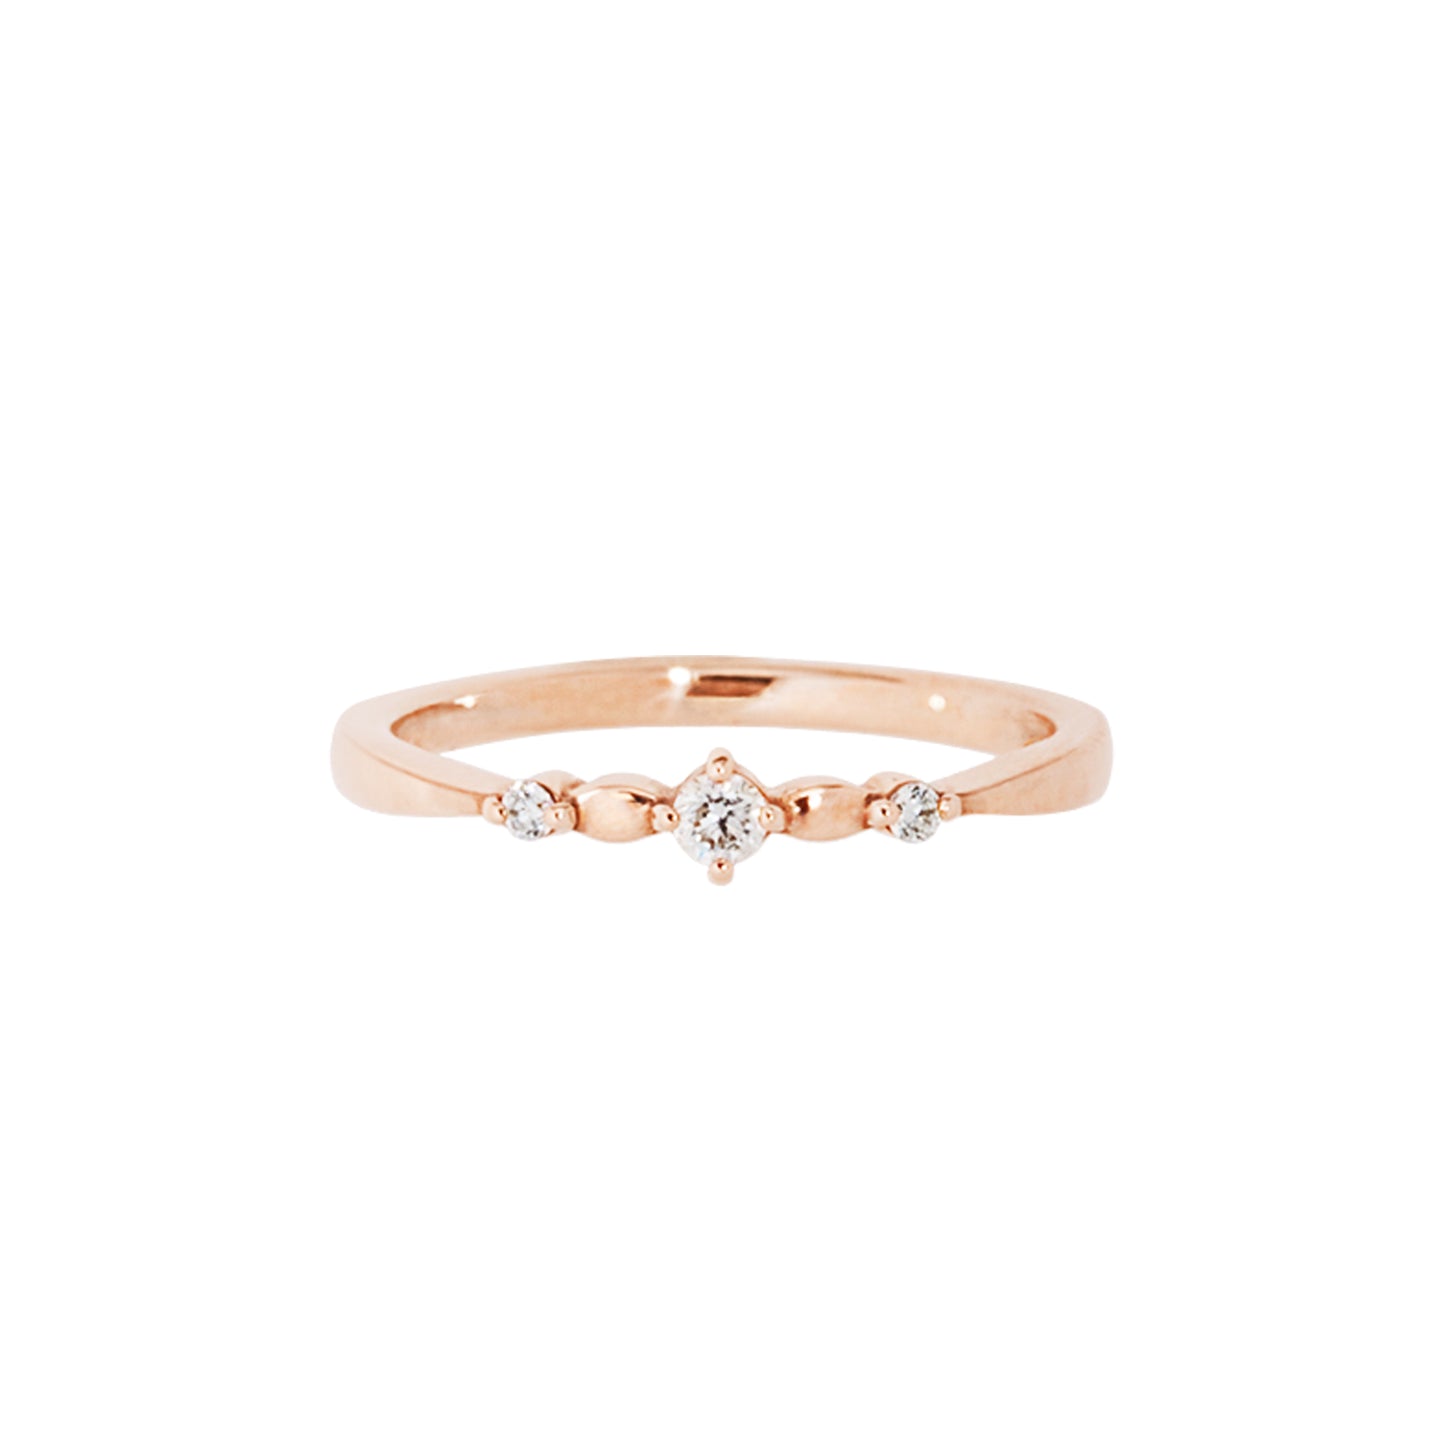 10K Rose Gold Diamond Pinky Ring - Product Image